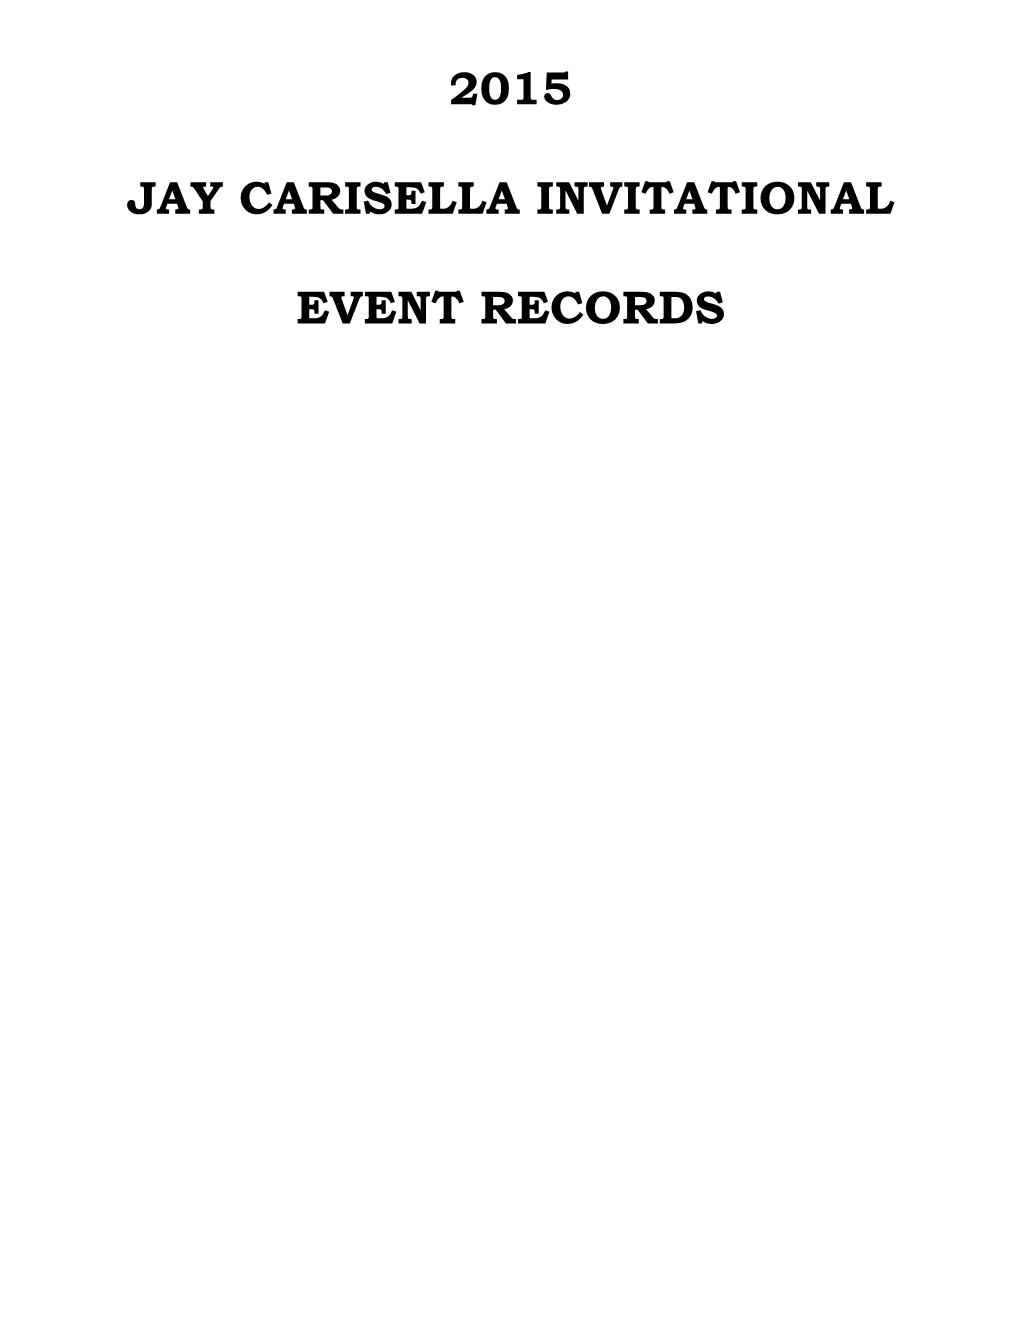 2015 Jay Carisella Invitational Event Records